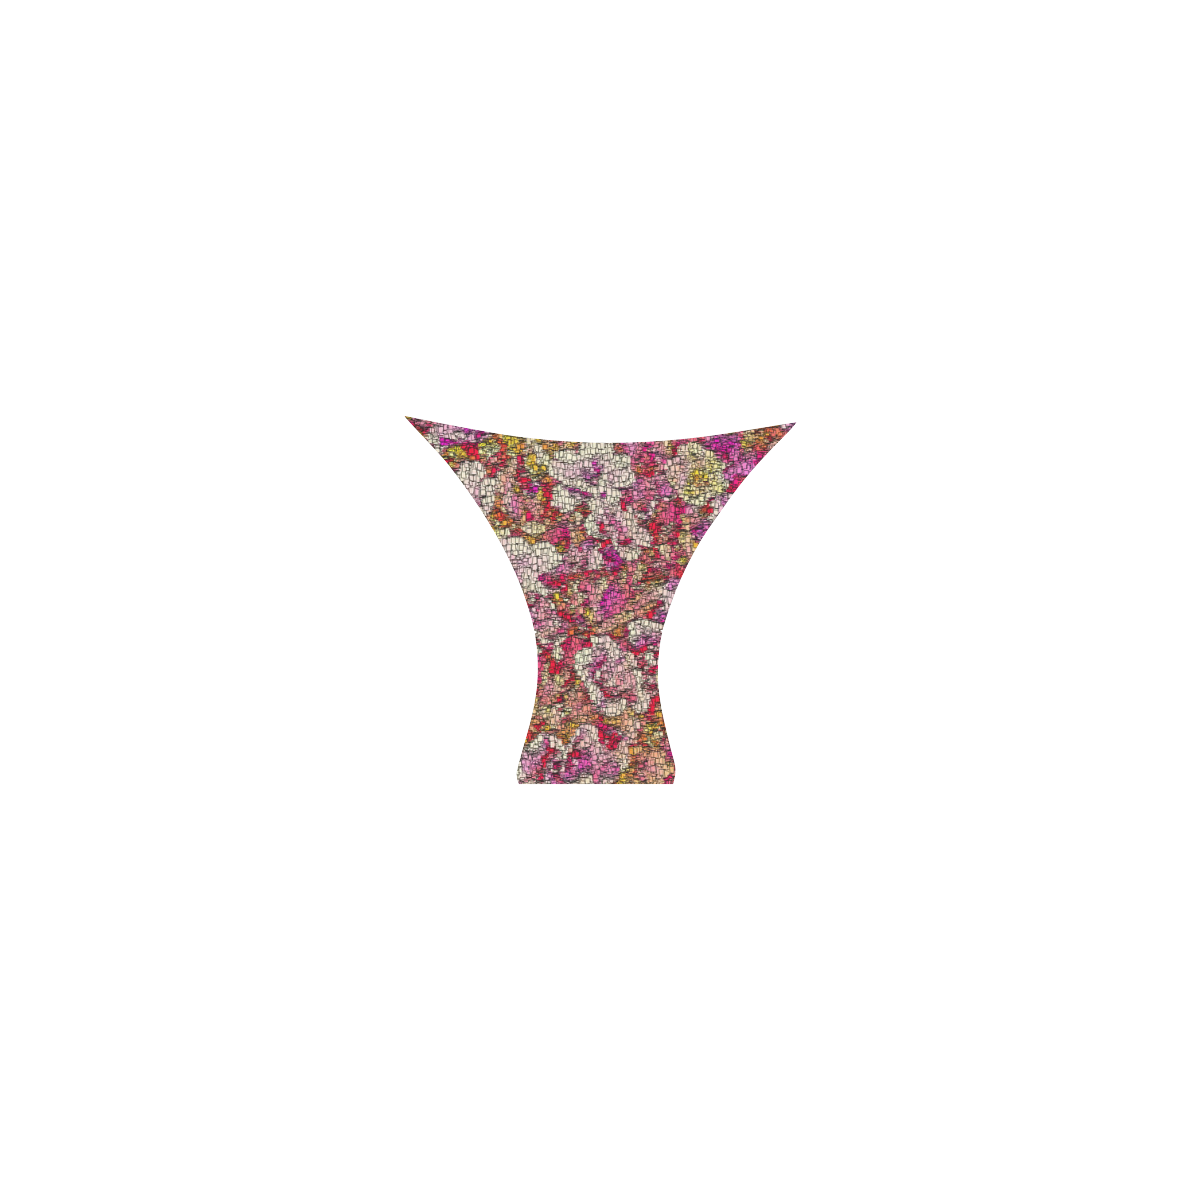 MosaicArt pink  floral by JamColors Custom Bikini Swimsuit (Model S01)